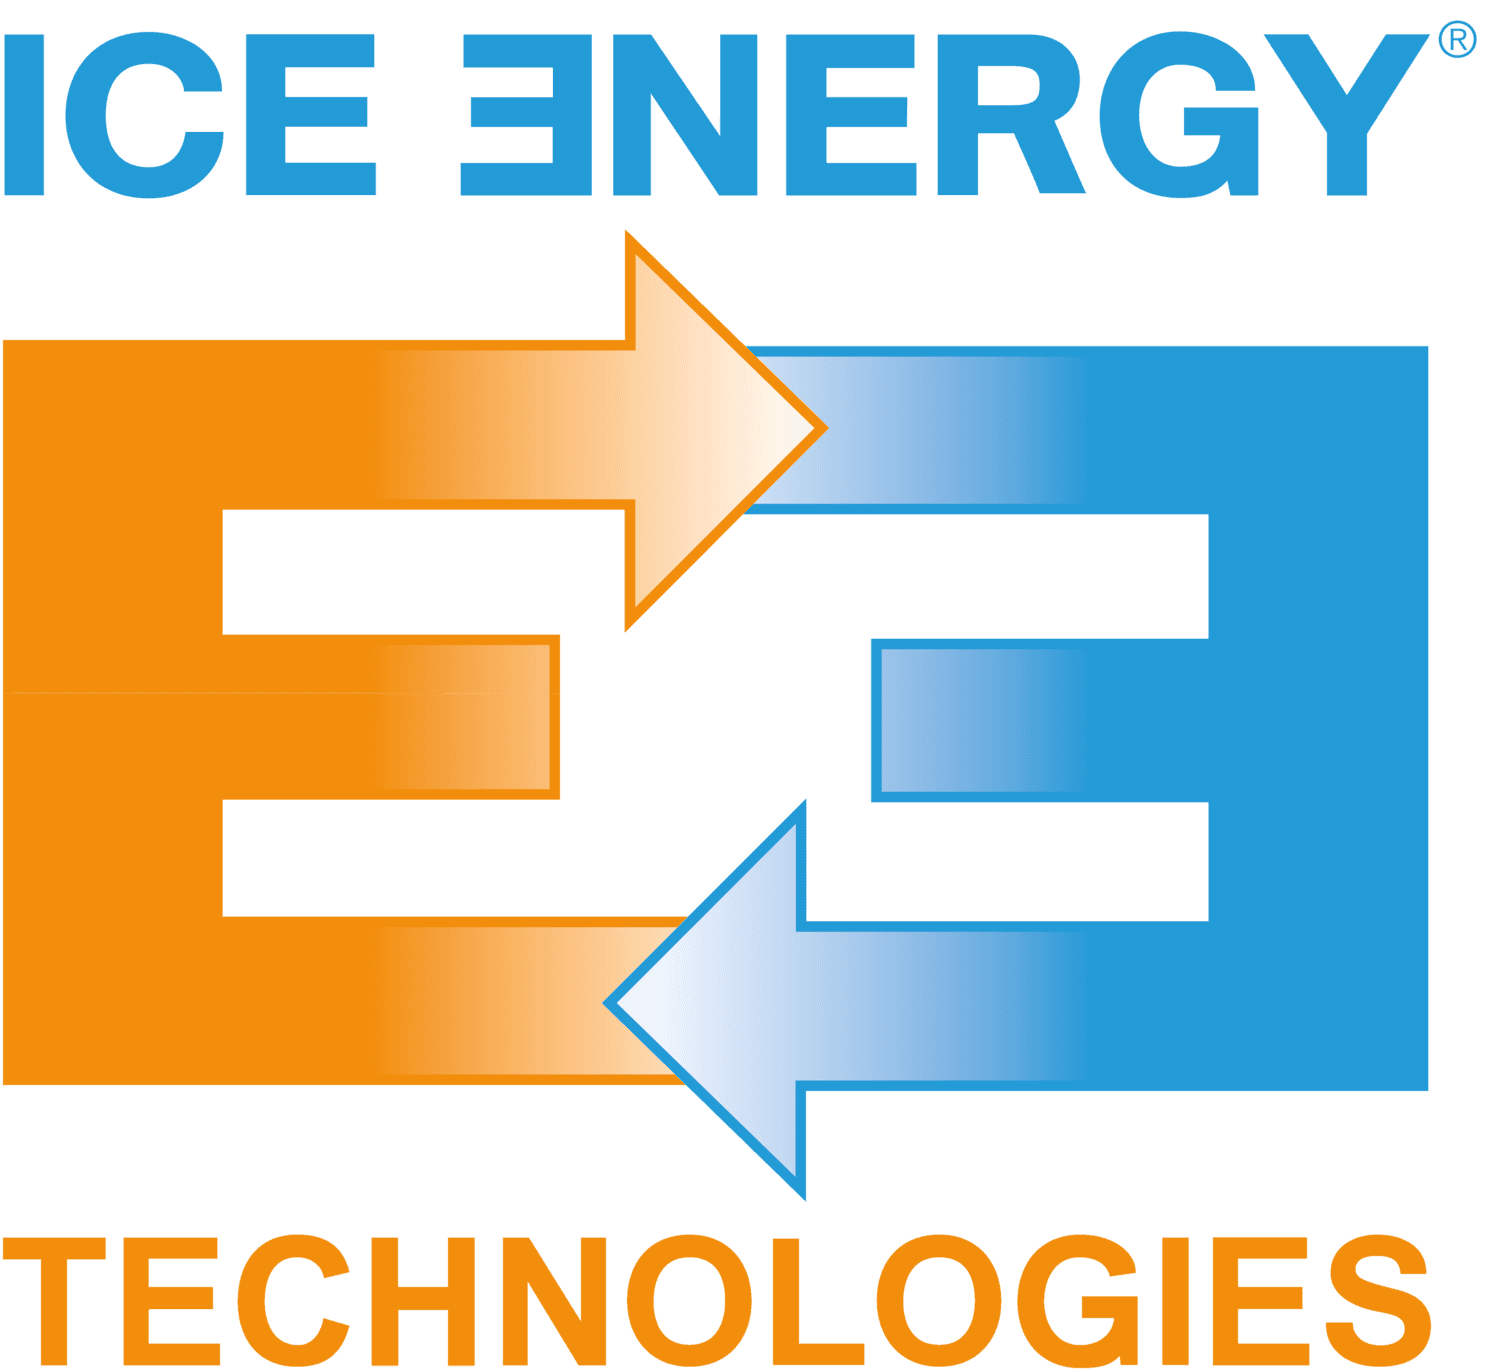 Ice Energy logo